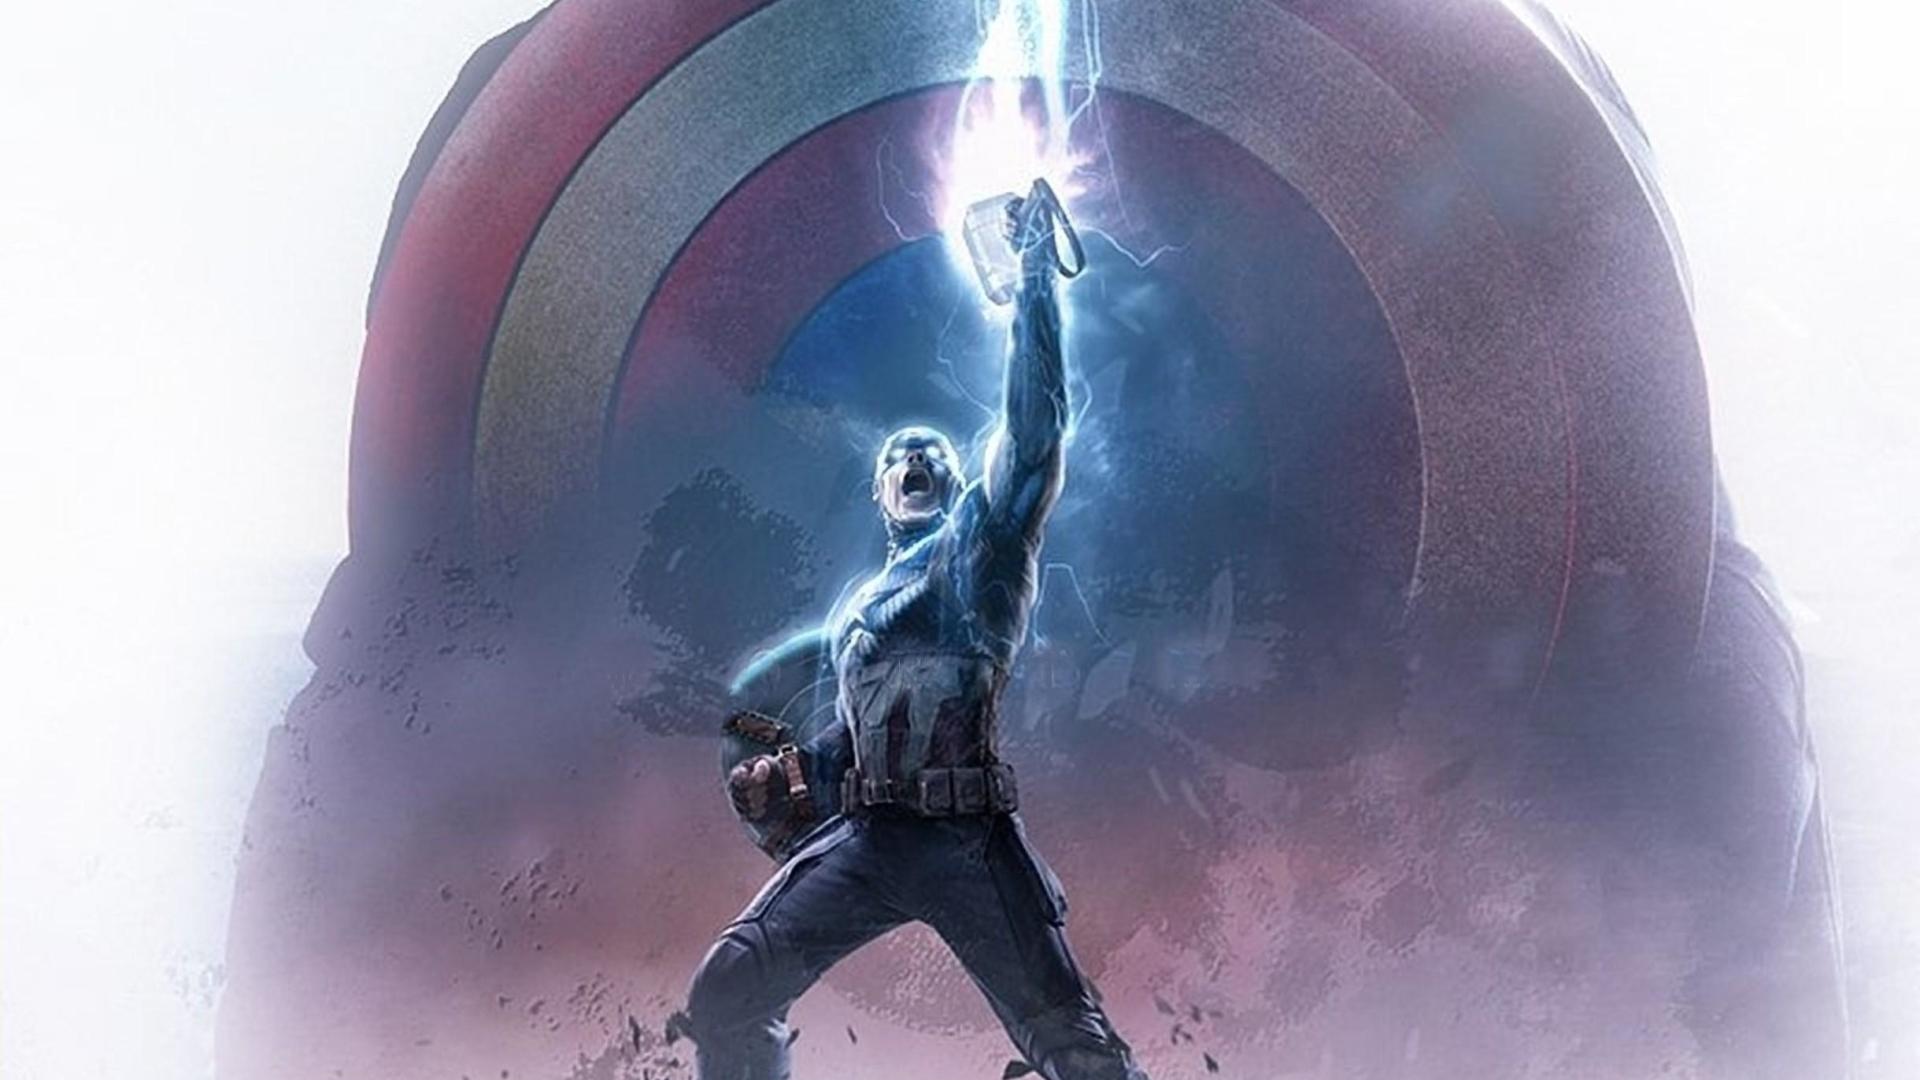 Captain America Thor Hammer 1080P Laptop Full HD Wallpaper, HD Artist 4K Wallpaper, Image, Photo and Background